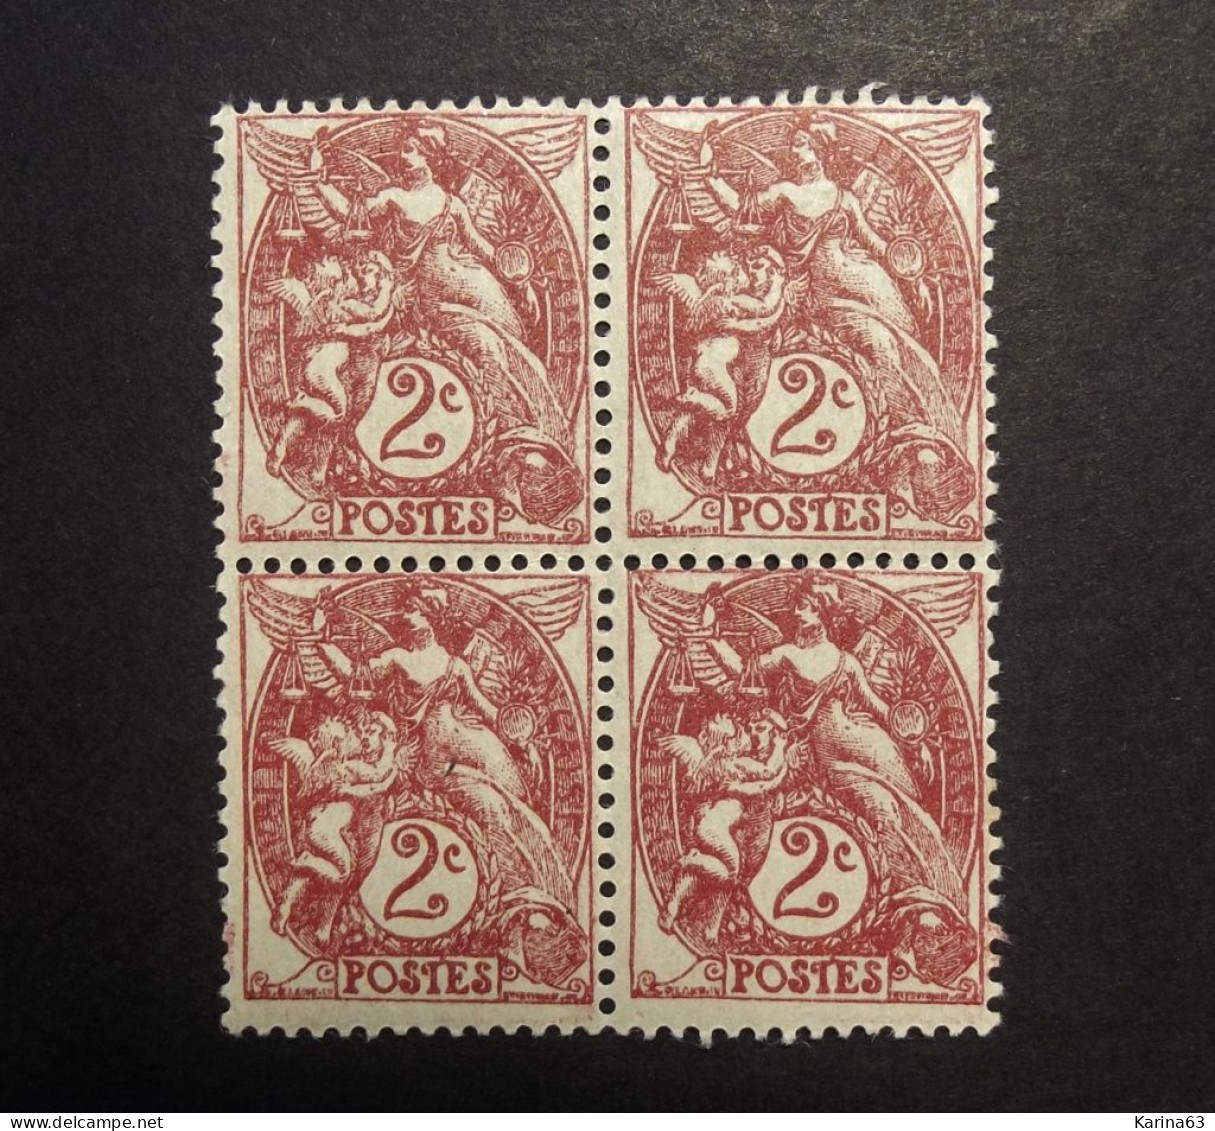 France - Frankrijk - Blanc - 1900 - 29 - 4 bloc de 4 timbres - N° 107 - 107a - N°108 - N° 109  - Neuf - MNH